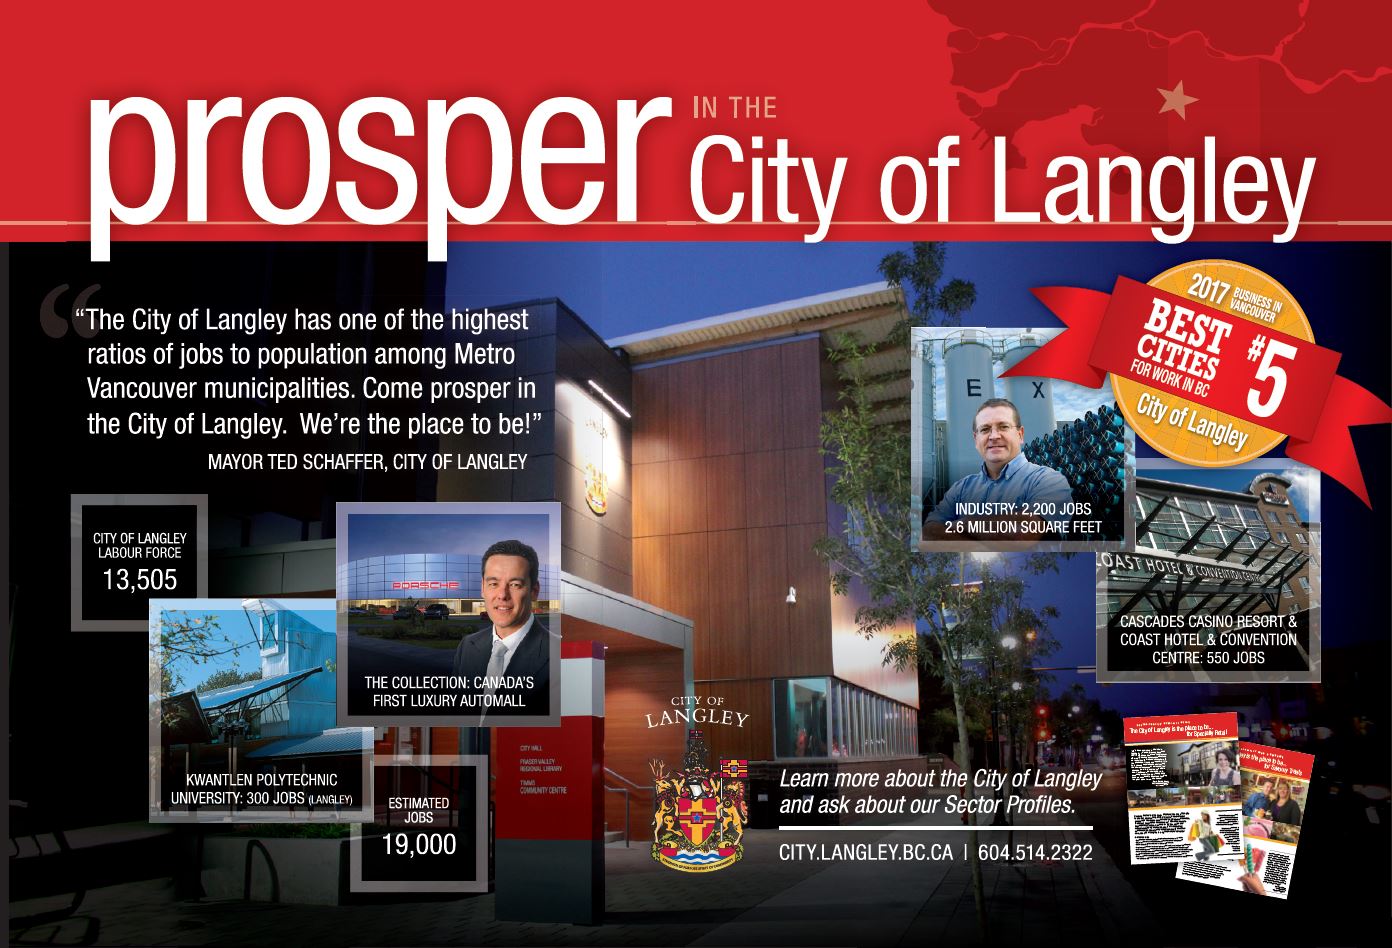 Prosper in the City of Langley